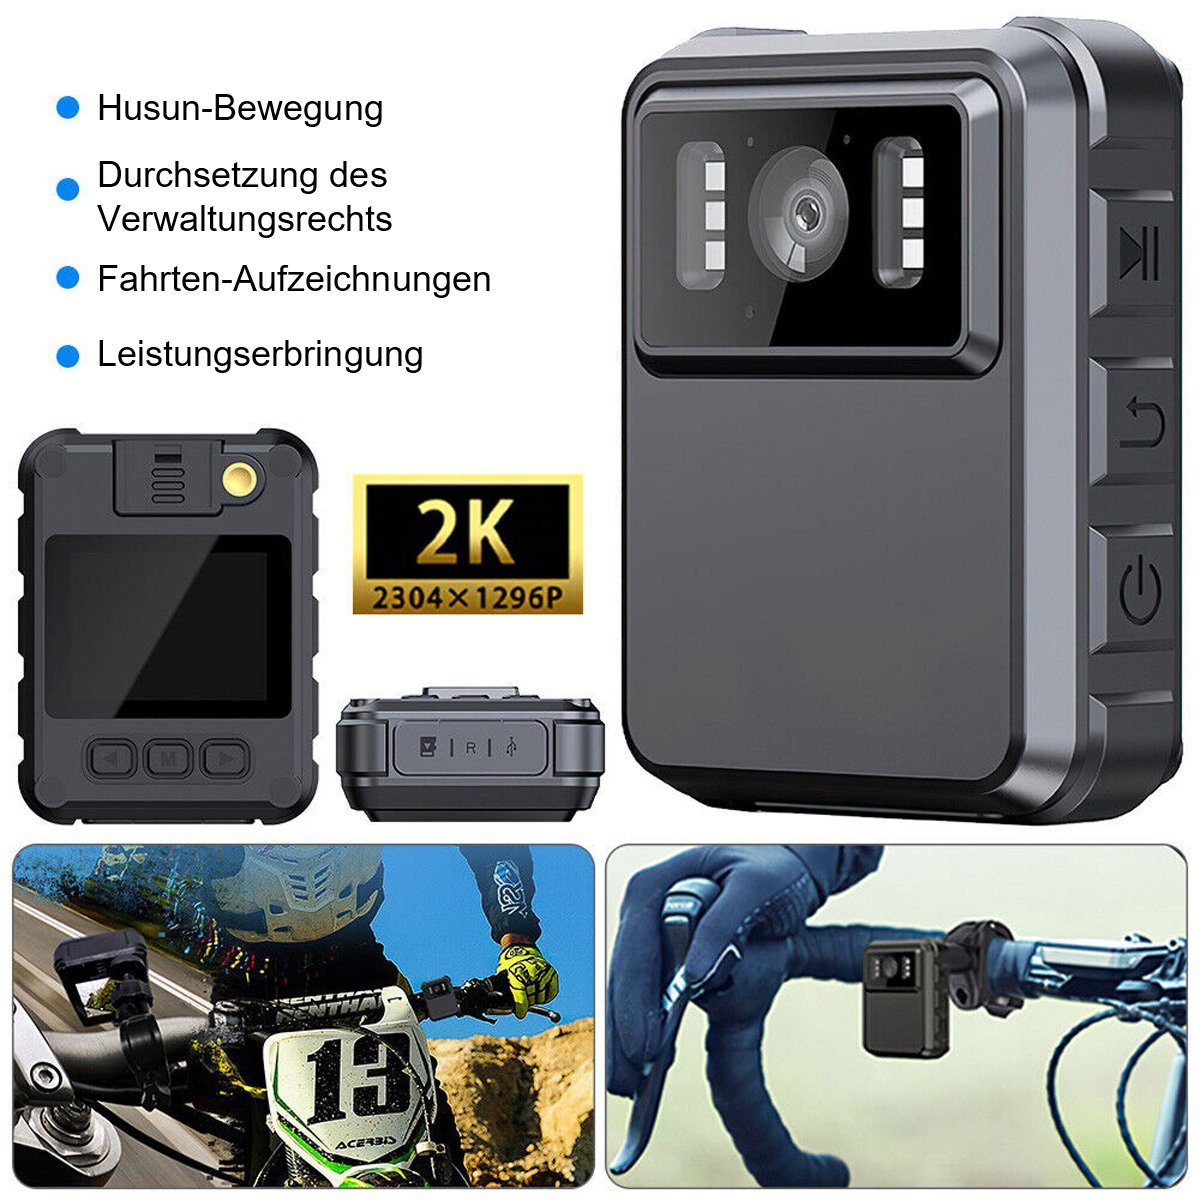 yozhiqu Tragbare kleine Kamera, Infrarot-Nachtsicht WIFI-Recorder Outdoor-Kamera (1080P HD, tragbar, IP65 wasserdicht, 1800mAh lange Akkulaufzeit)